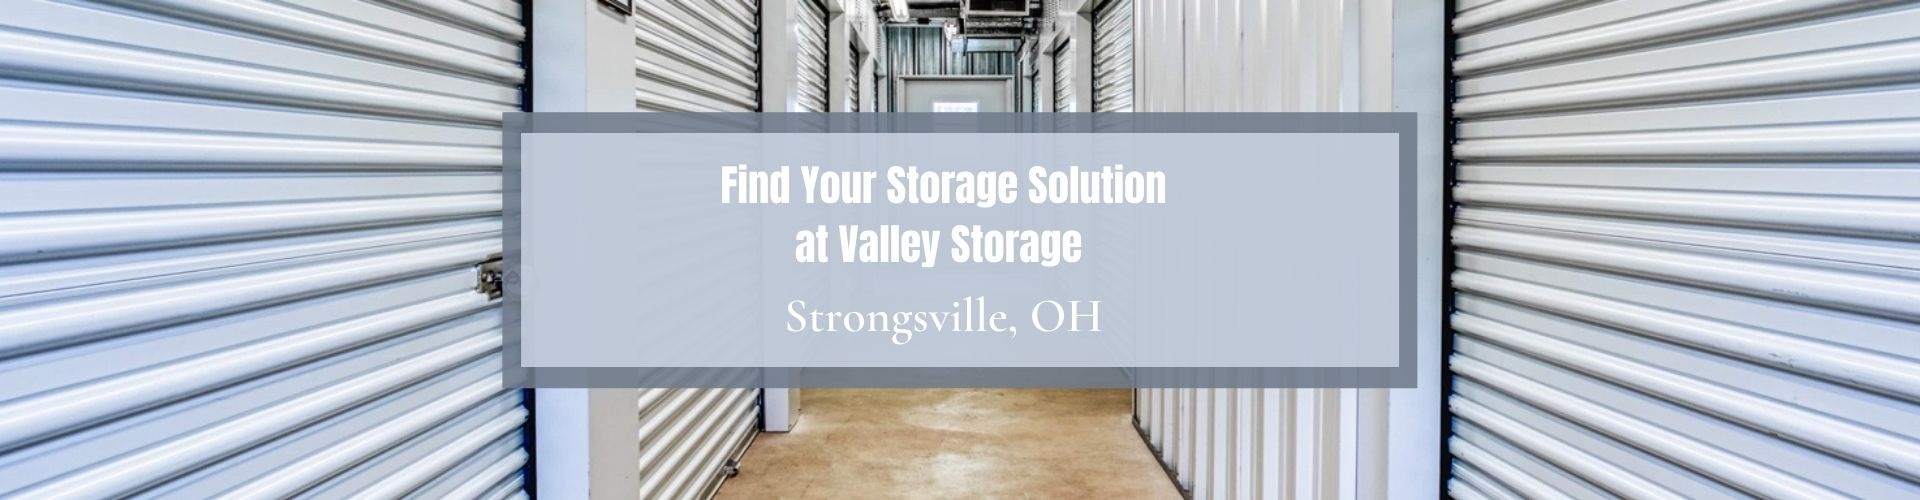 Valley Storage Strongsville OH